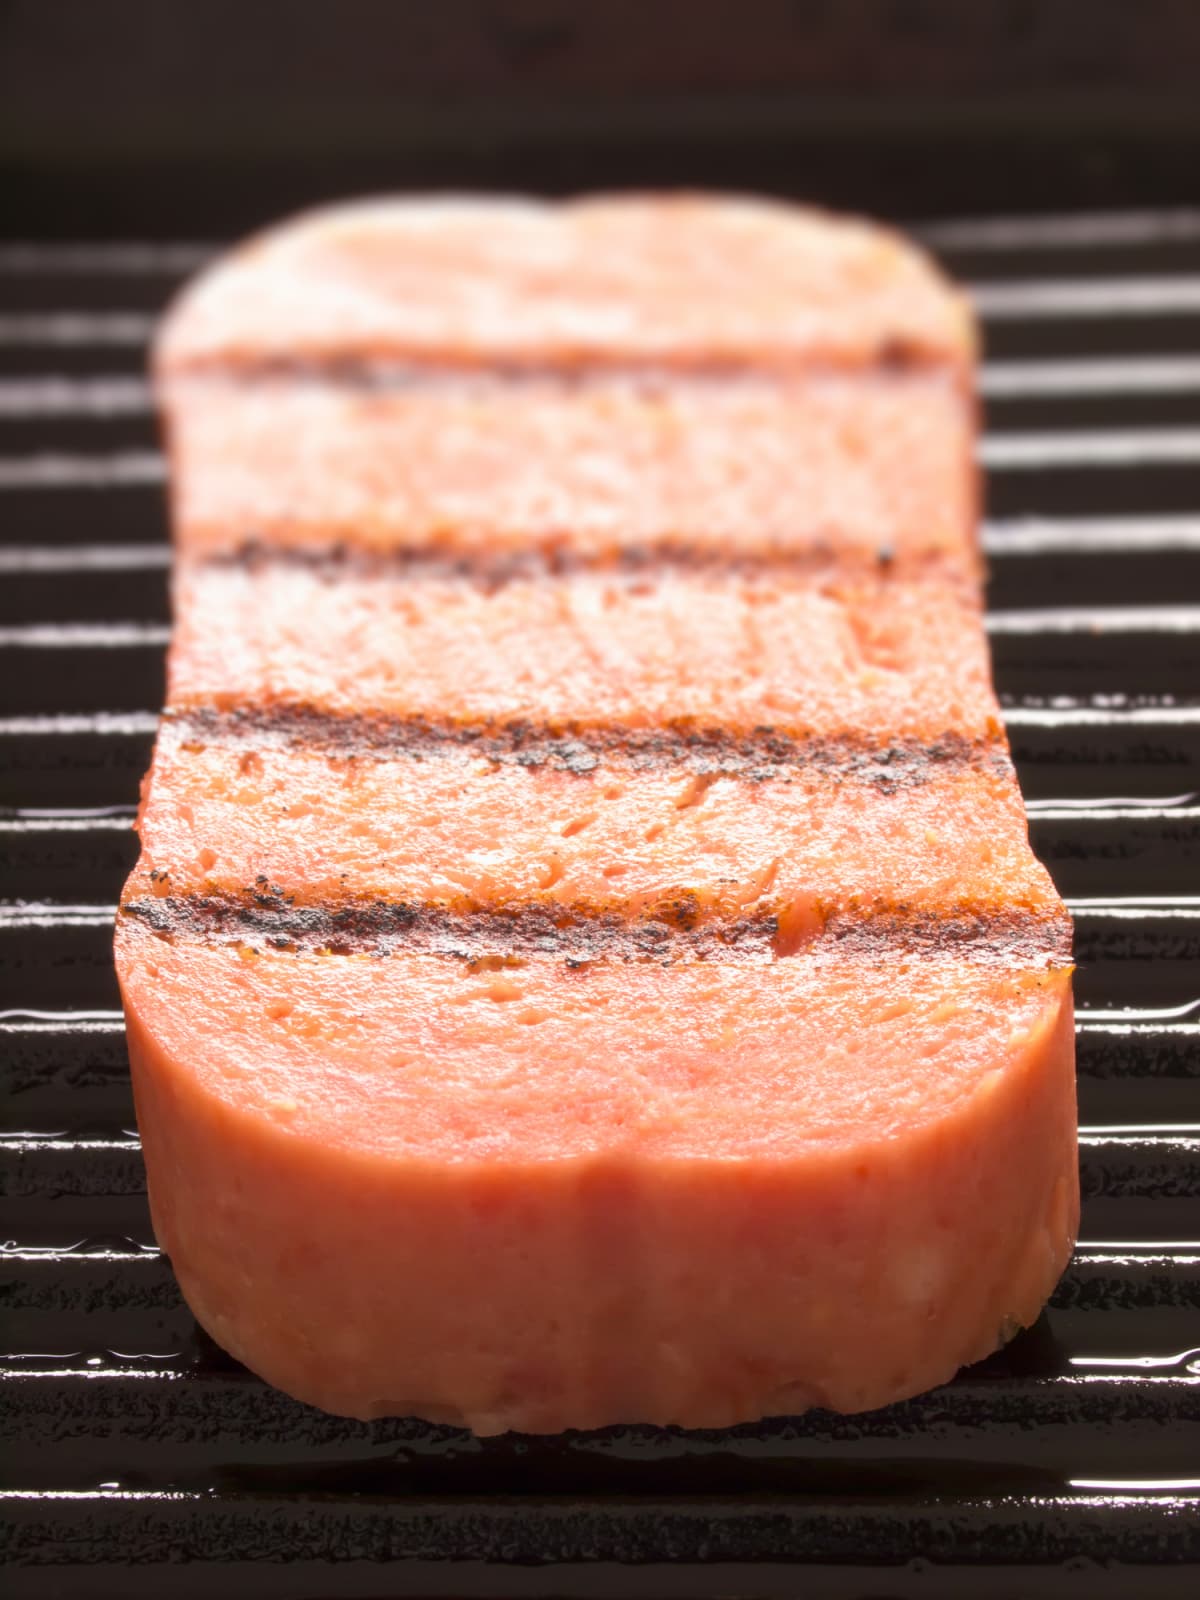 Pork lucheon meat cut into slices.